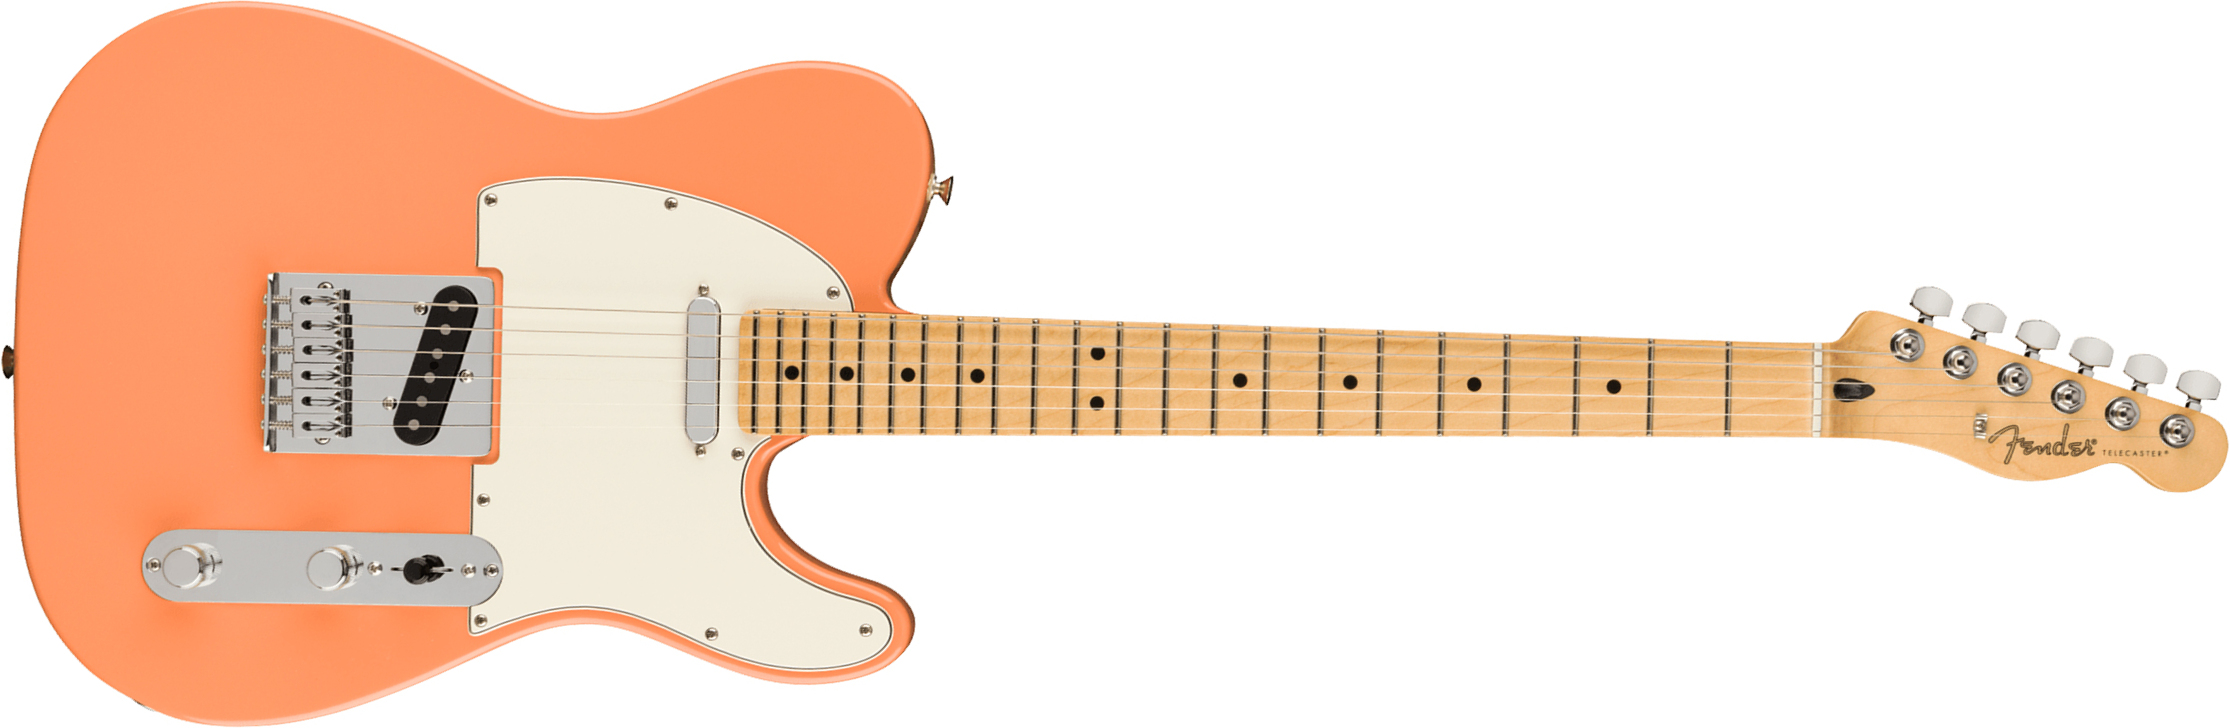 Fender Tele Player Ltd Mex 2s Ht Mn - Pacific Peach - Tel shape electric guitar - Main picture